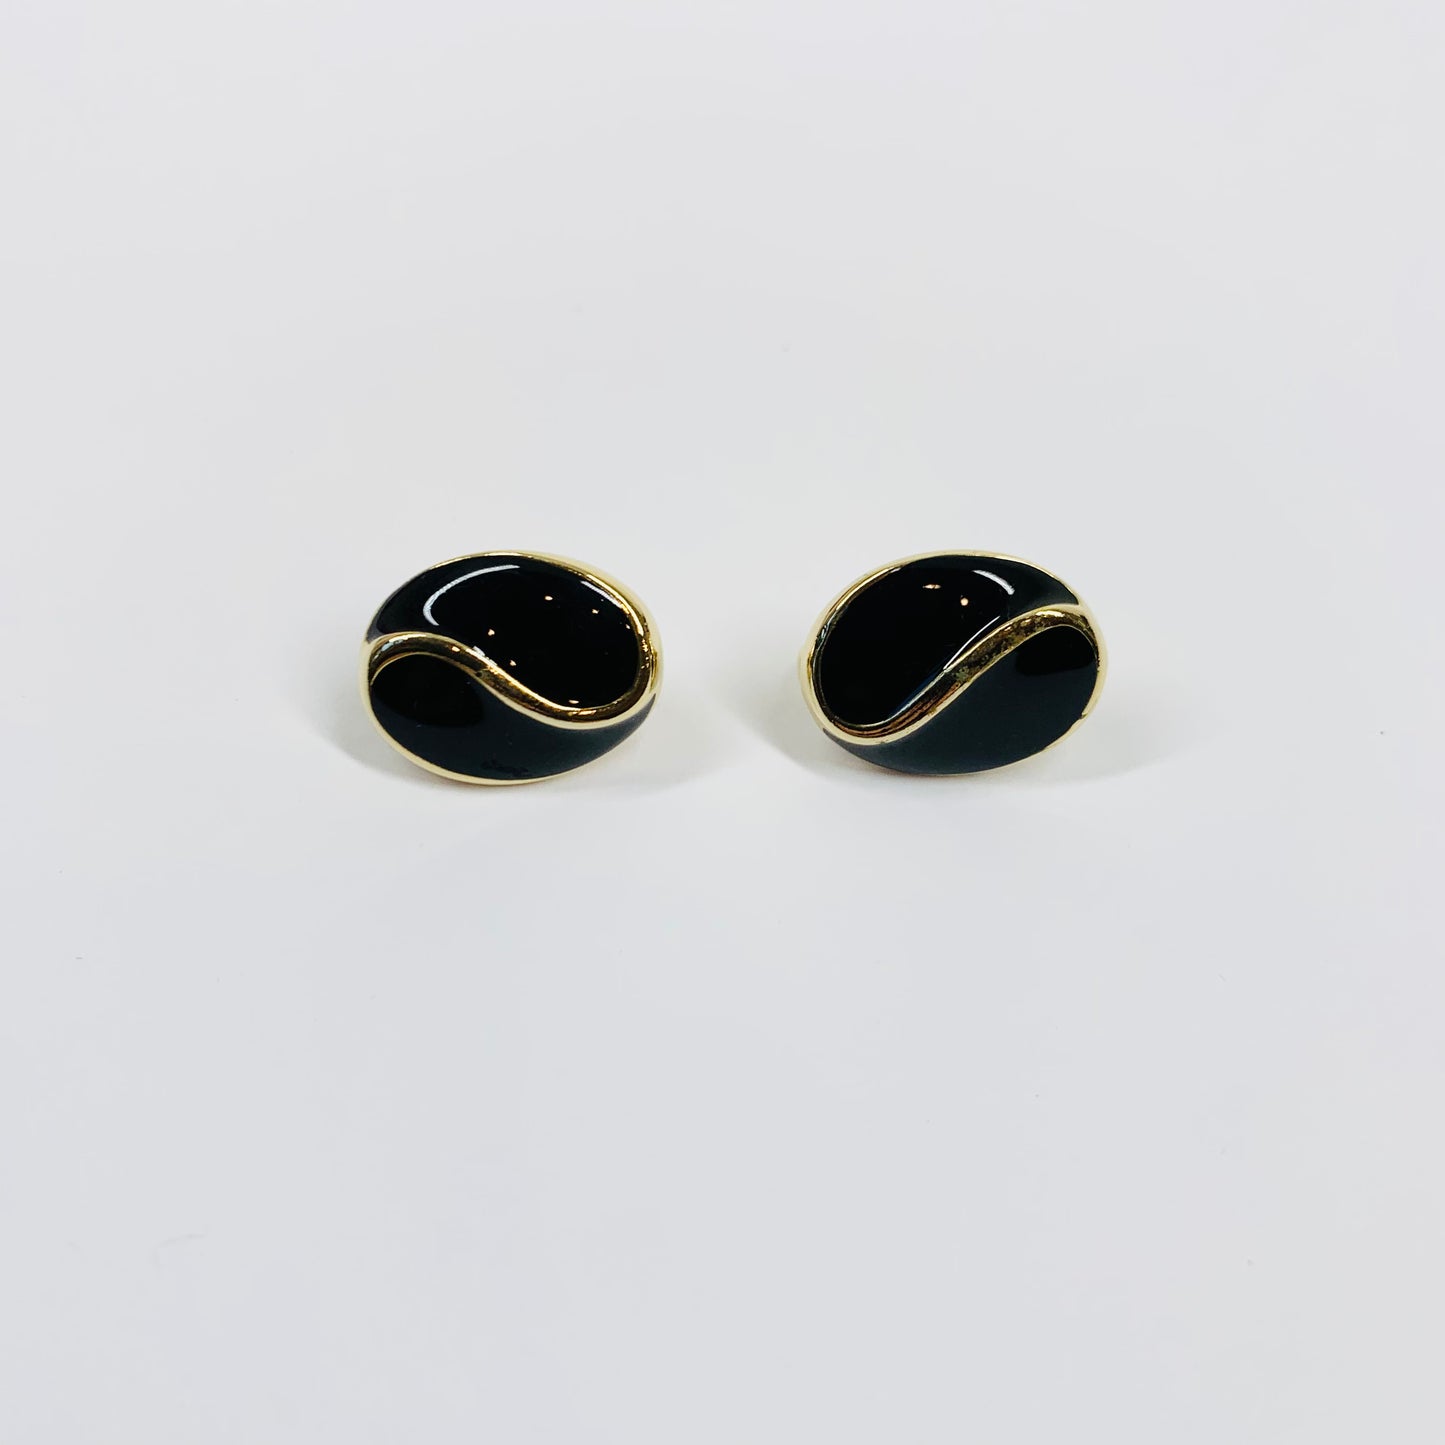 Rare 1960s Barcs statement necklace with black enamel pendant